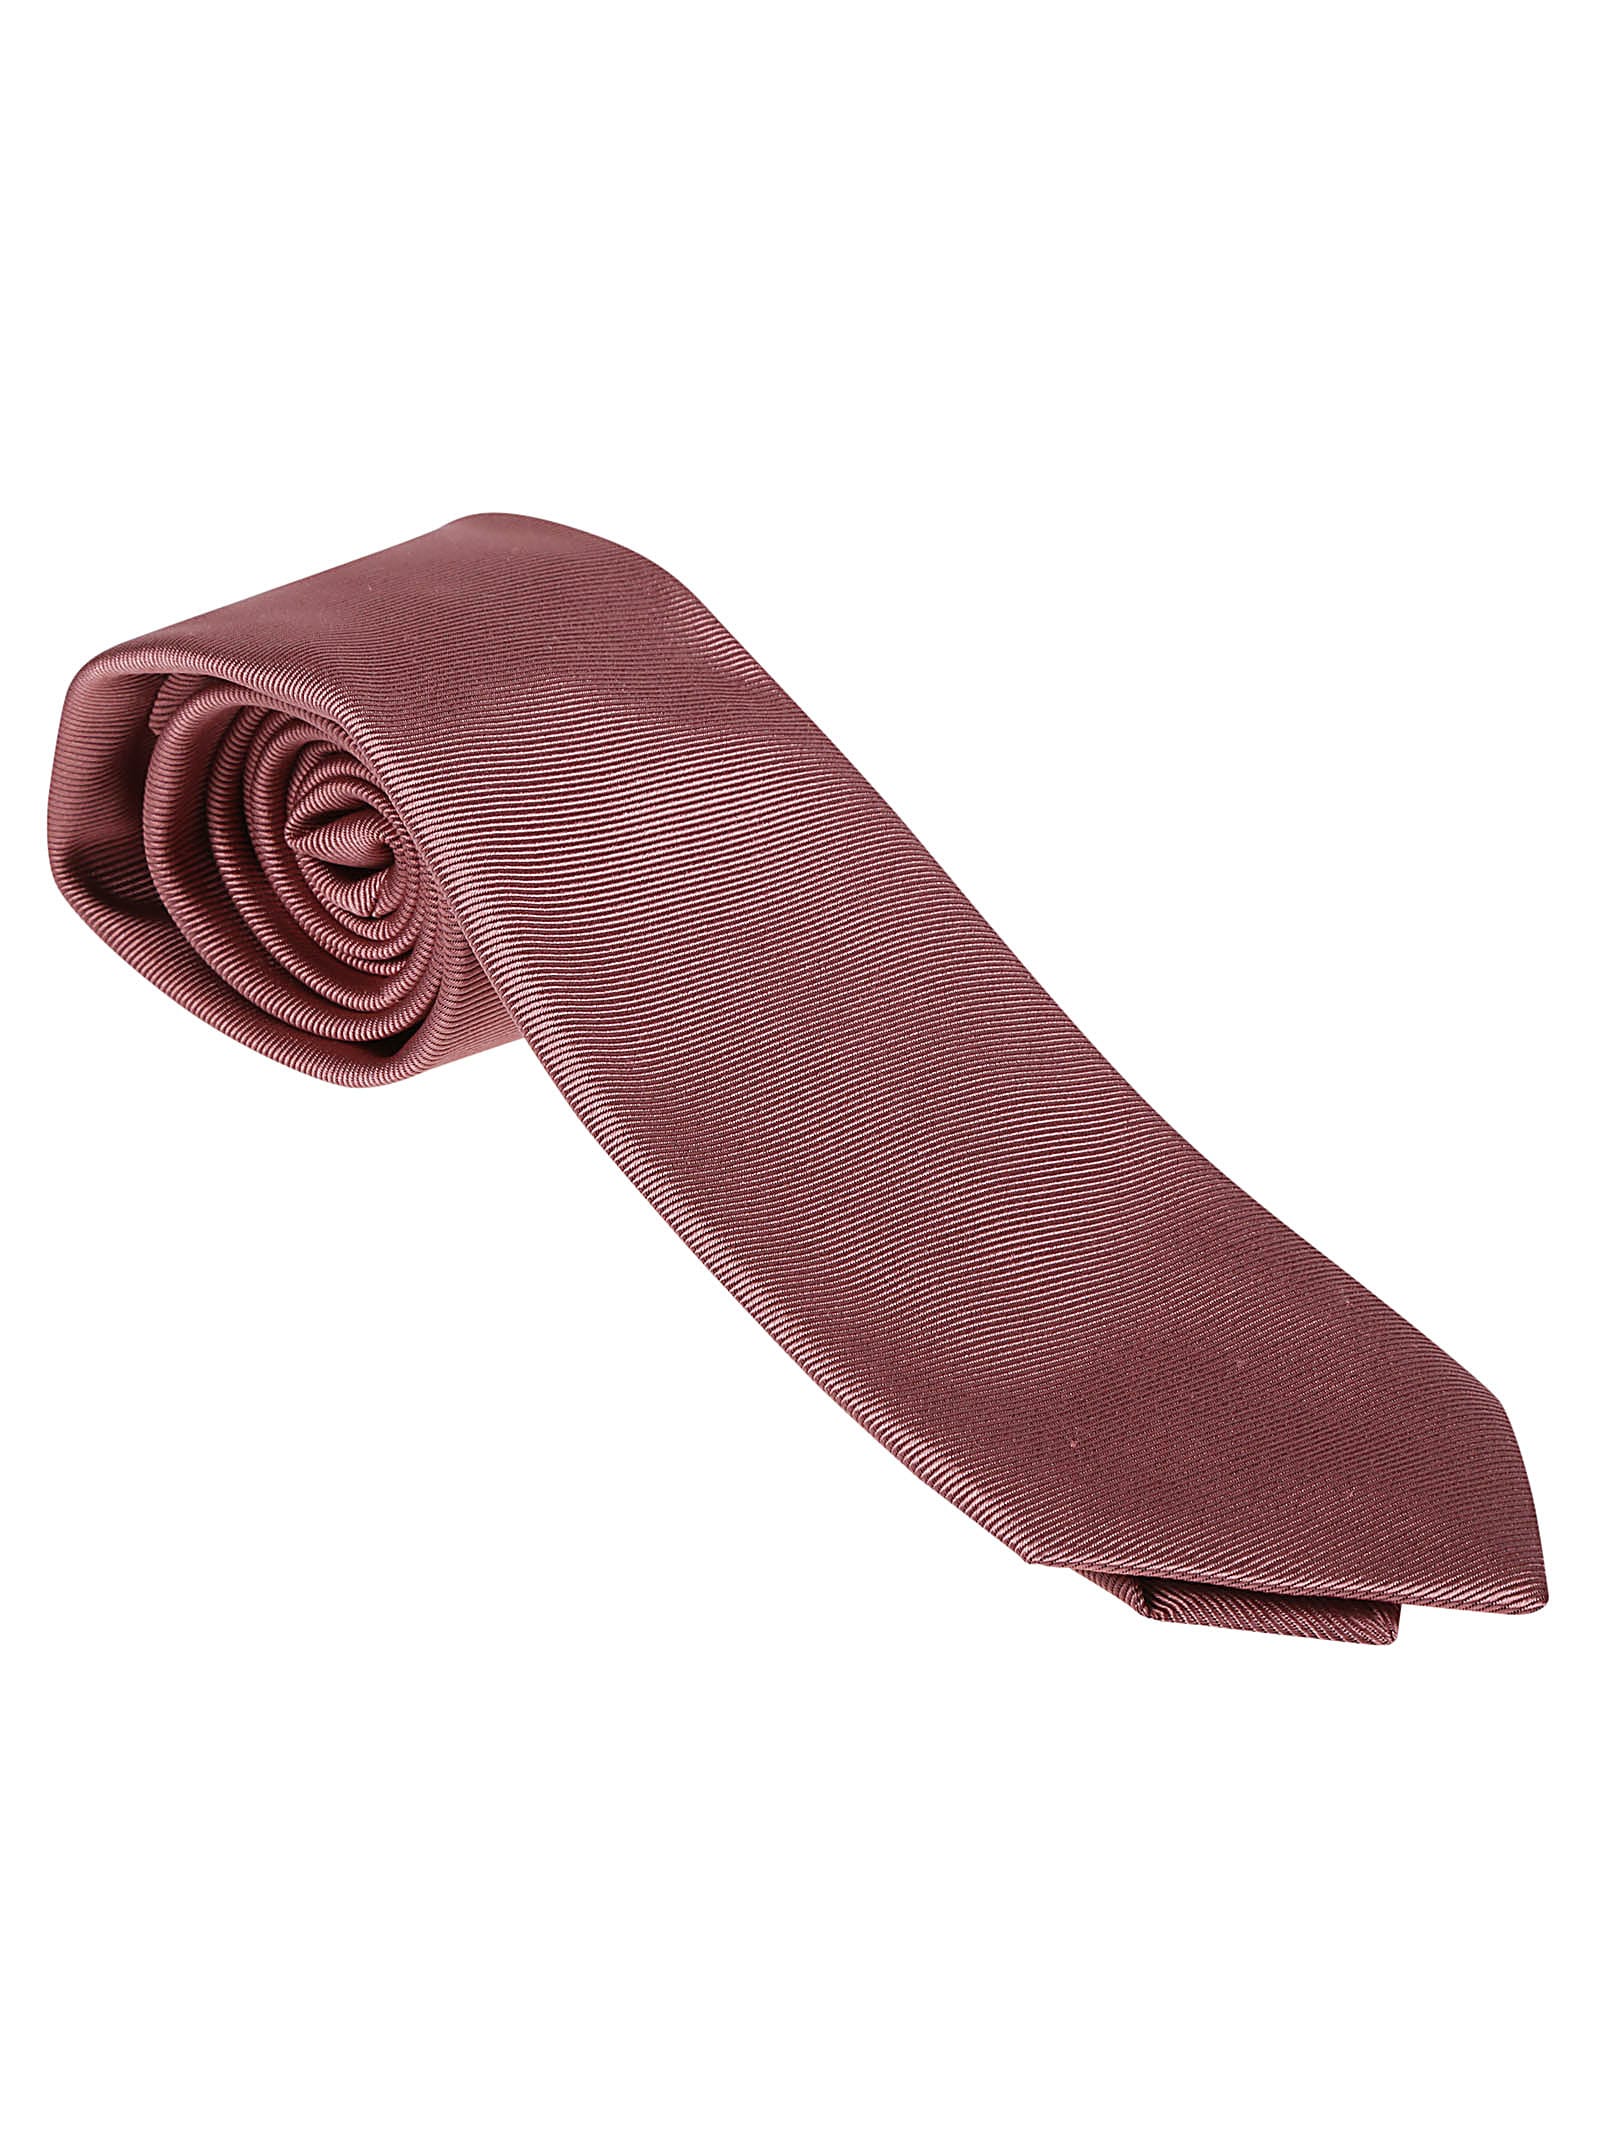 Etro Placed Tie In Rosa